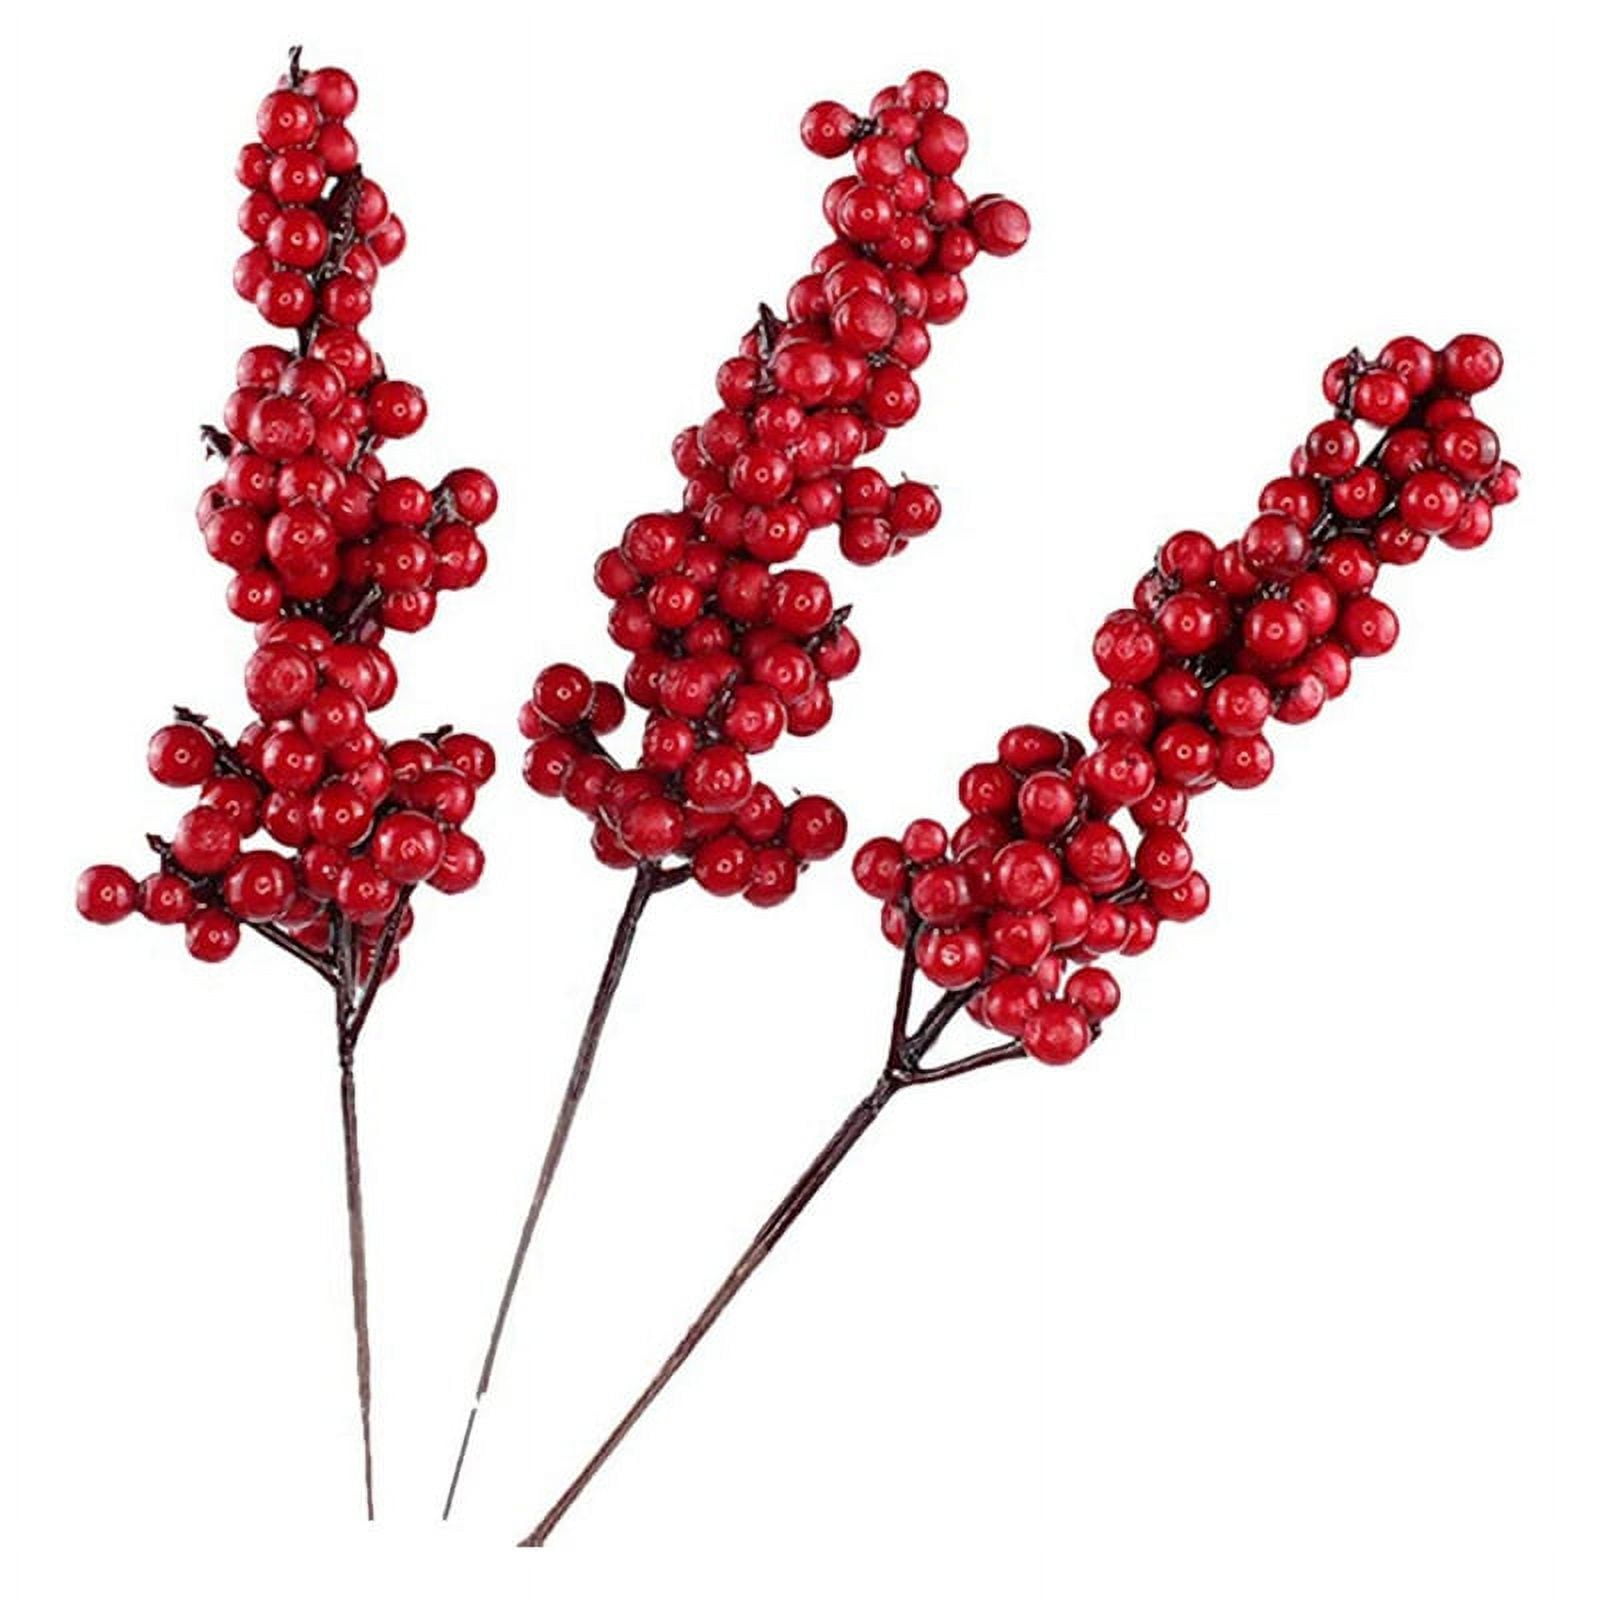 Machinehome Artificial Berry Stems Artificial Flowers Christmas